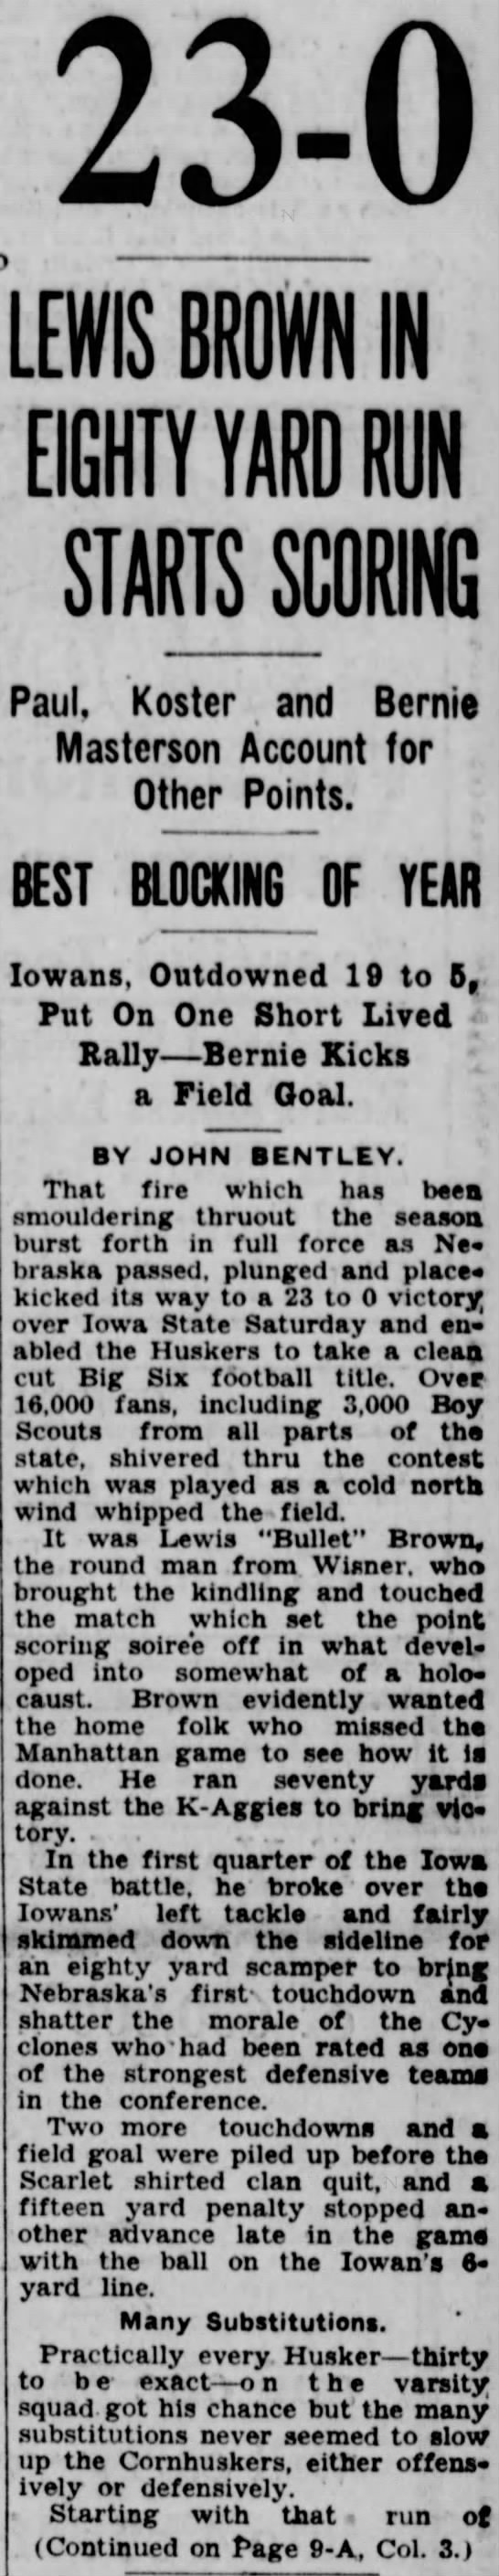 1931 Nebraska-Iowa State football, part 1 - 